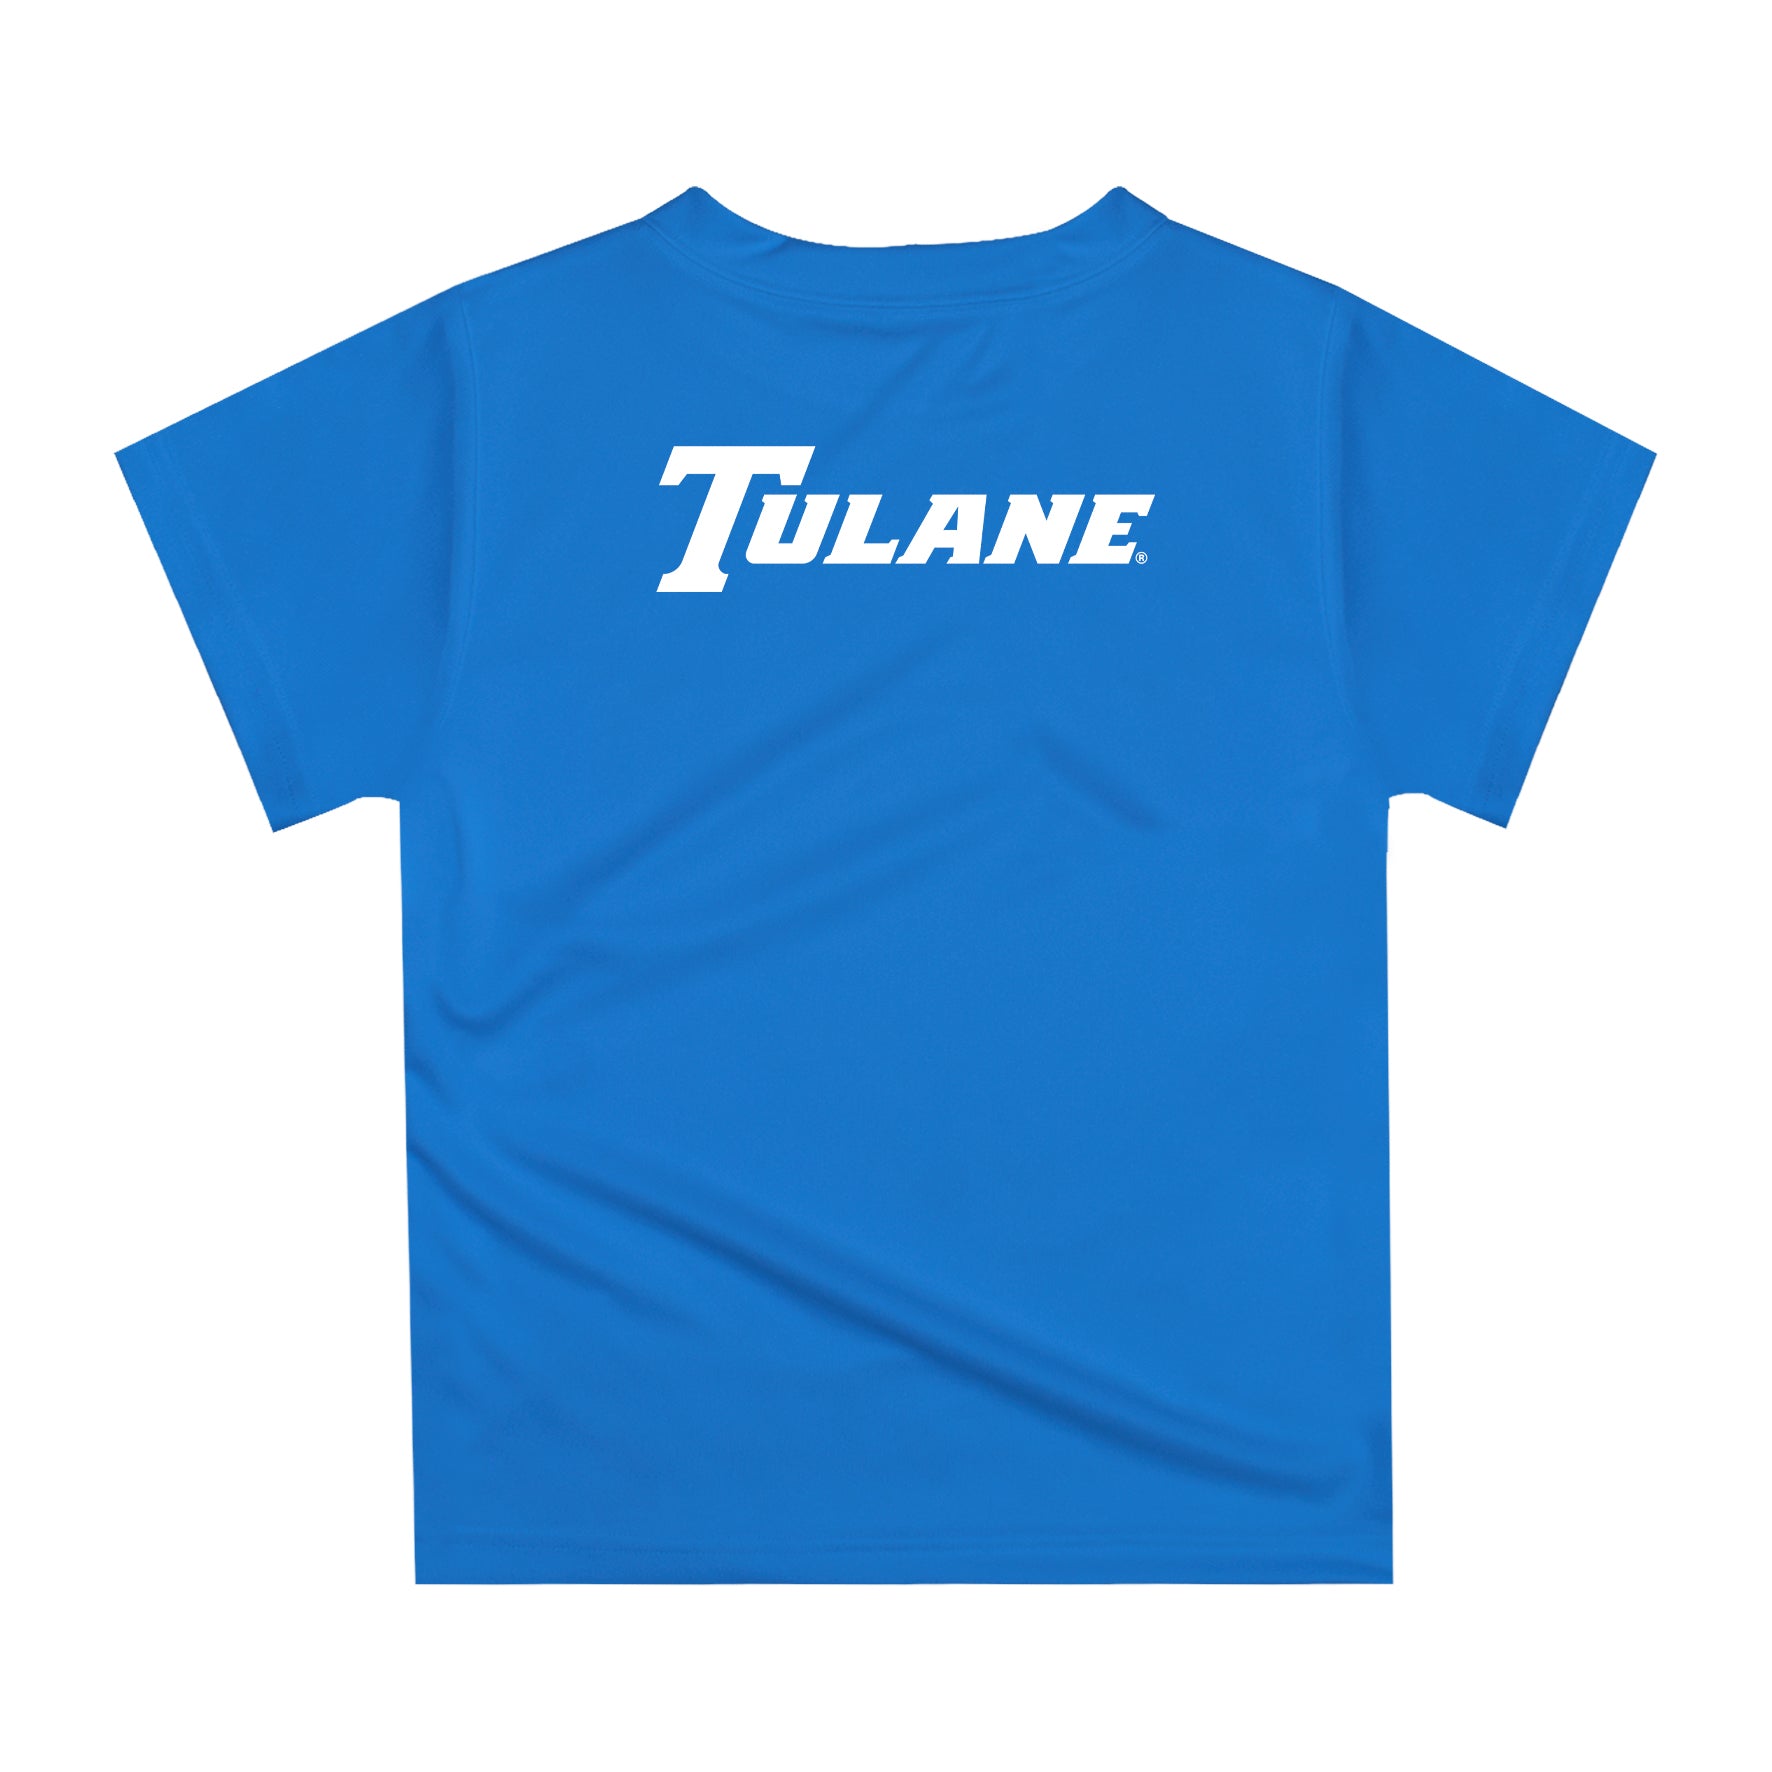 Tulane Green Wave Original Dripping Football Helmet Light Blue T-Shirt by Vive La Fete